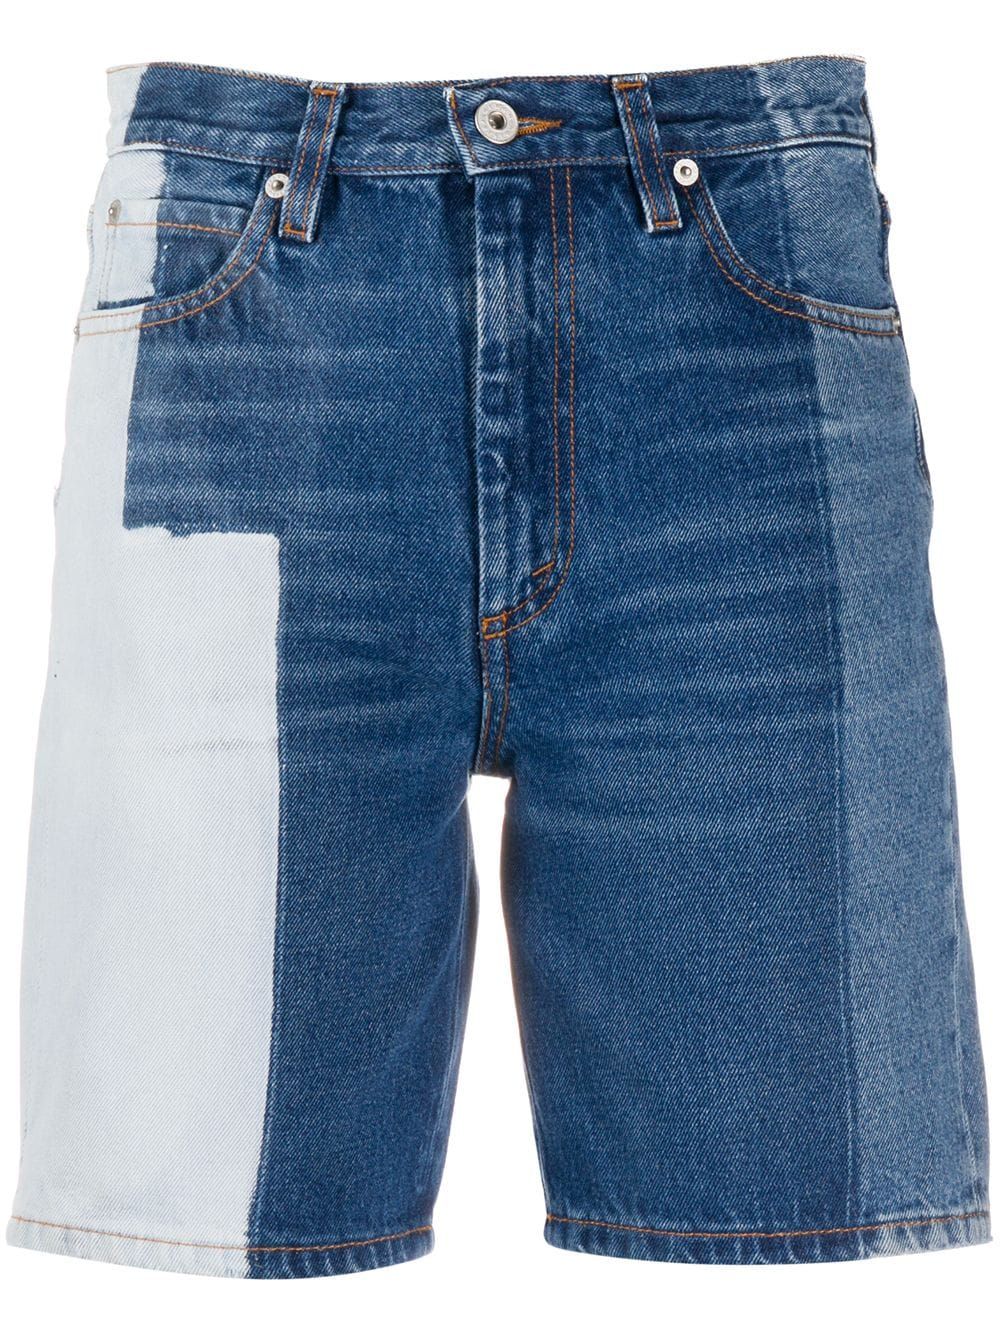 best cheap jean shorts